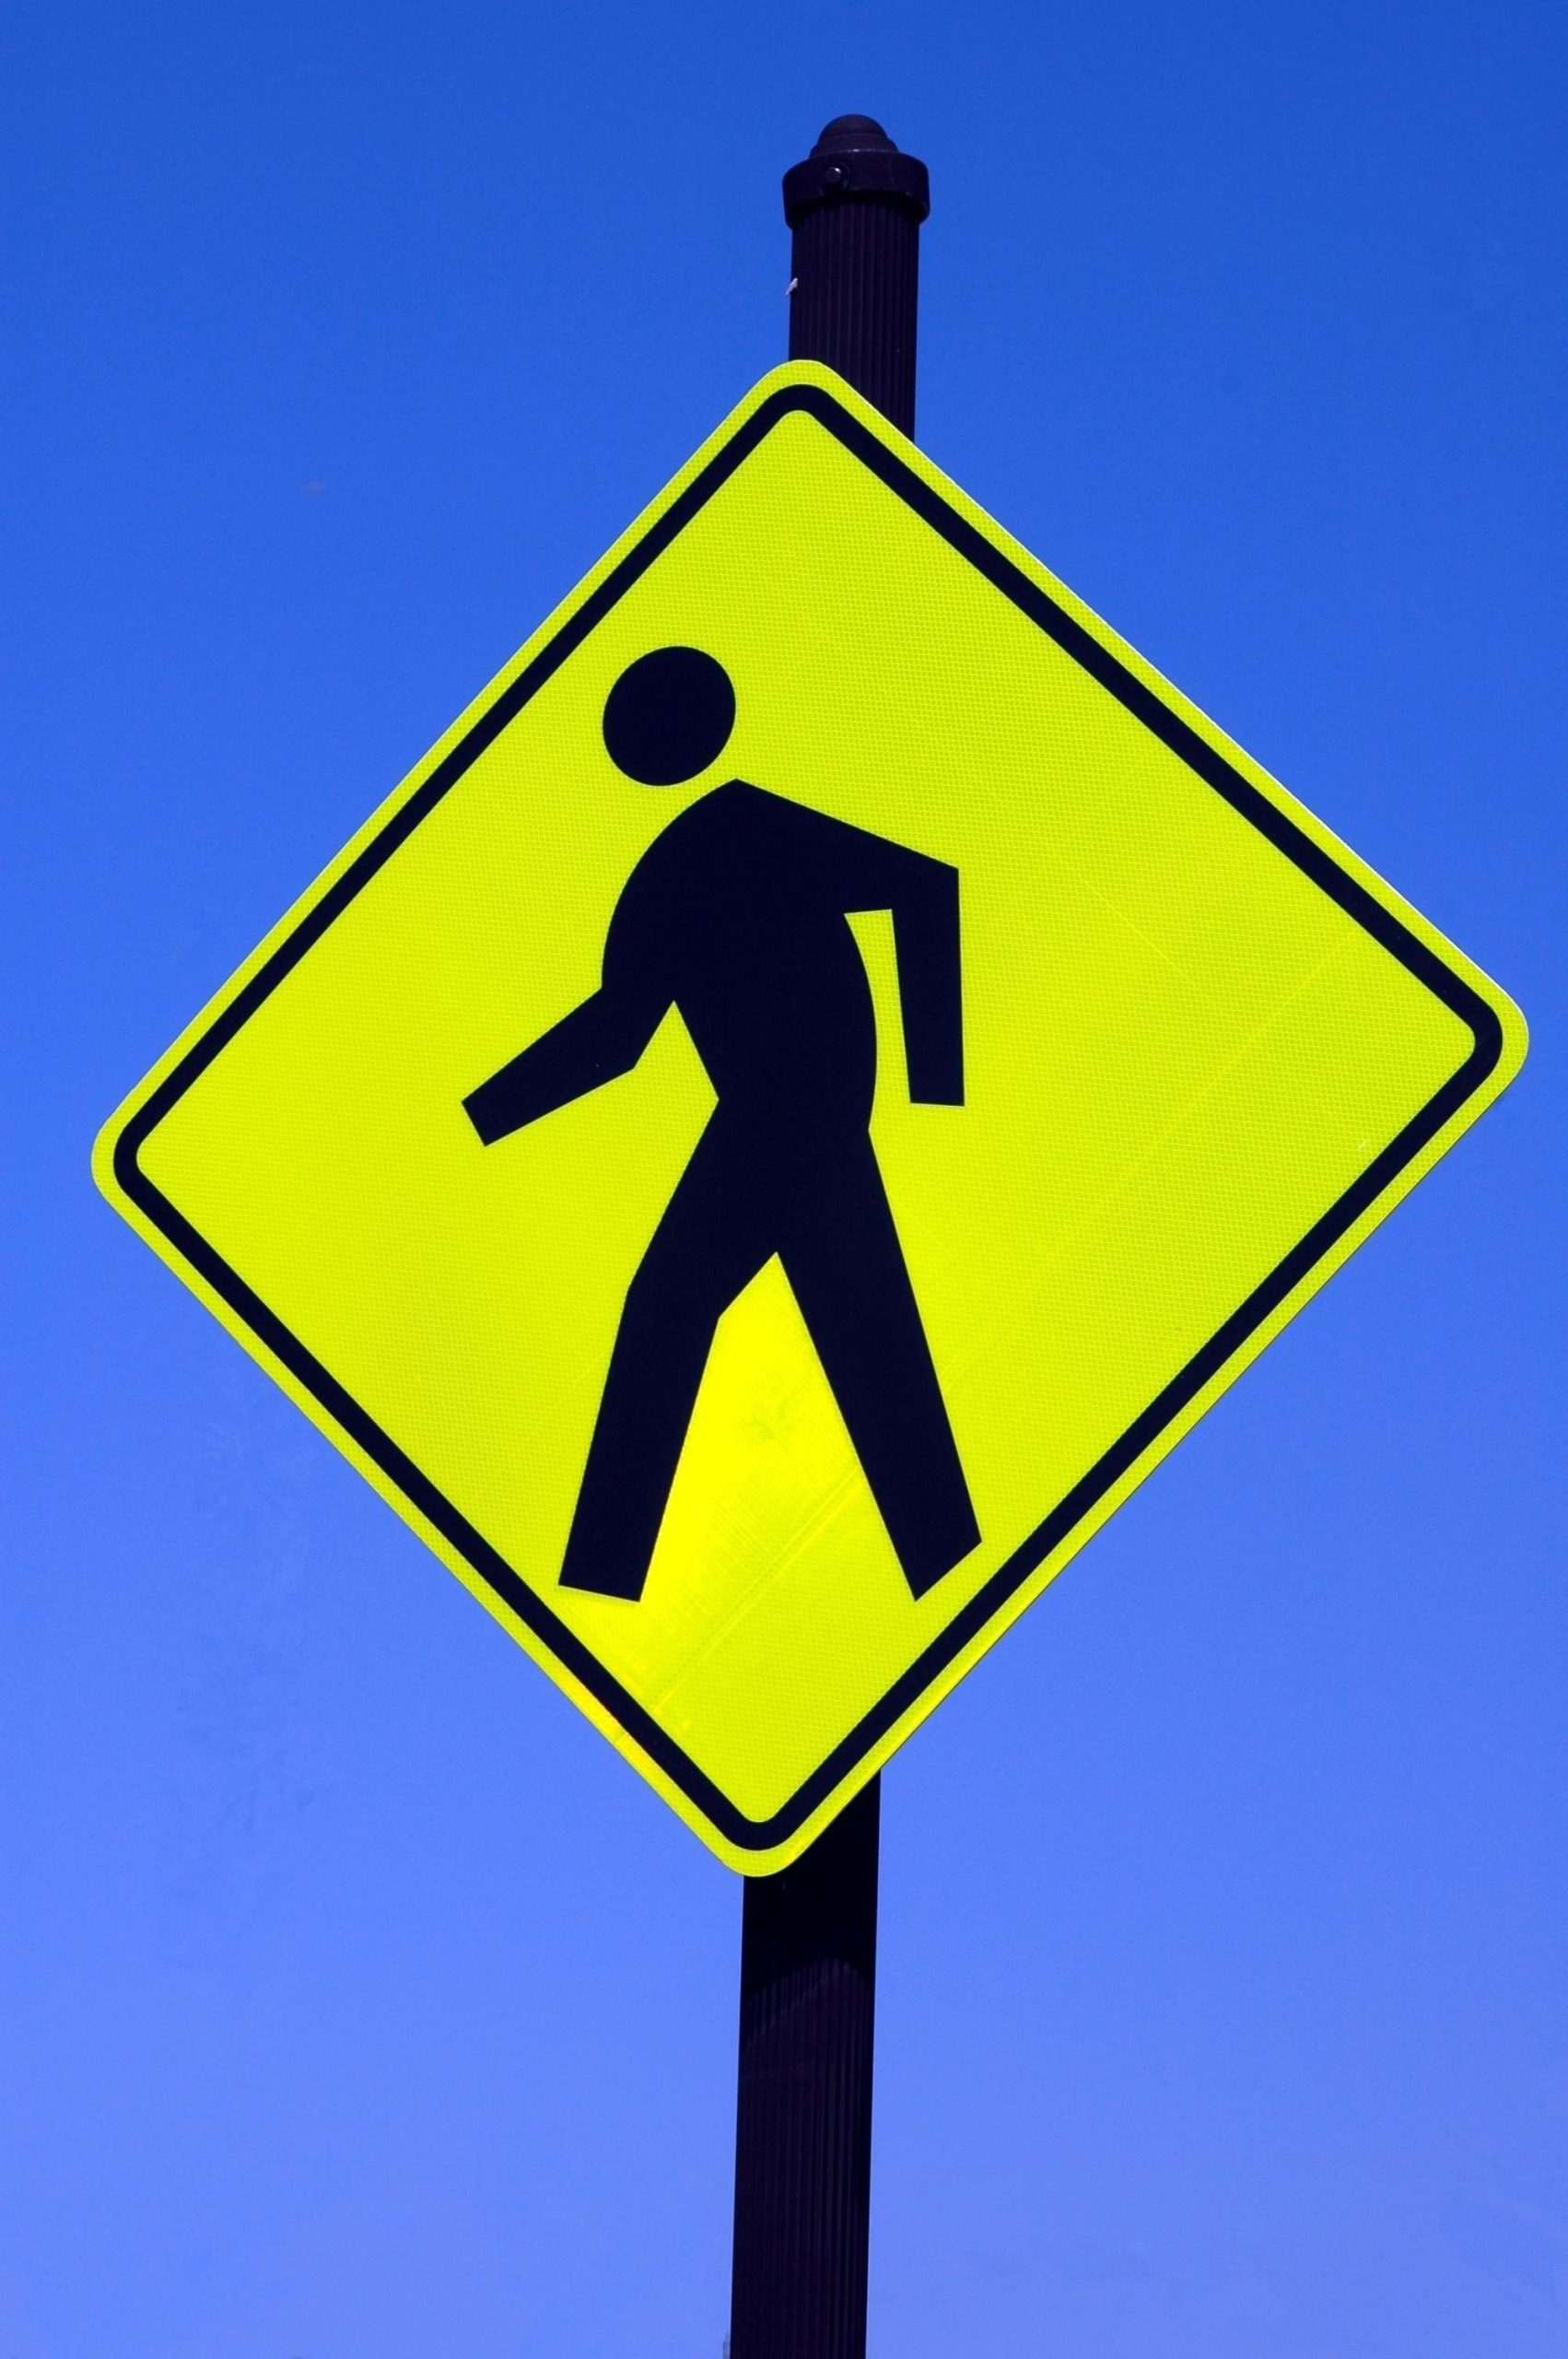 Ilustrasi-pejalan-kaki-pedestrian-walking-person-people-road-traffic-1165249-sumber-pxhere.com_-scaled.jpg